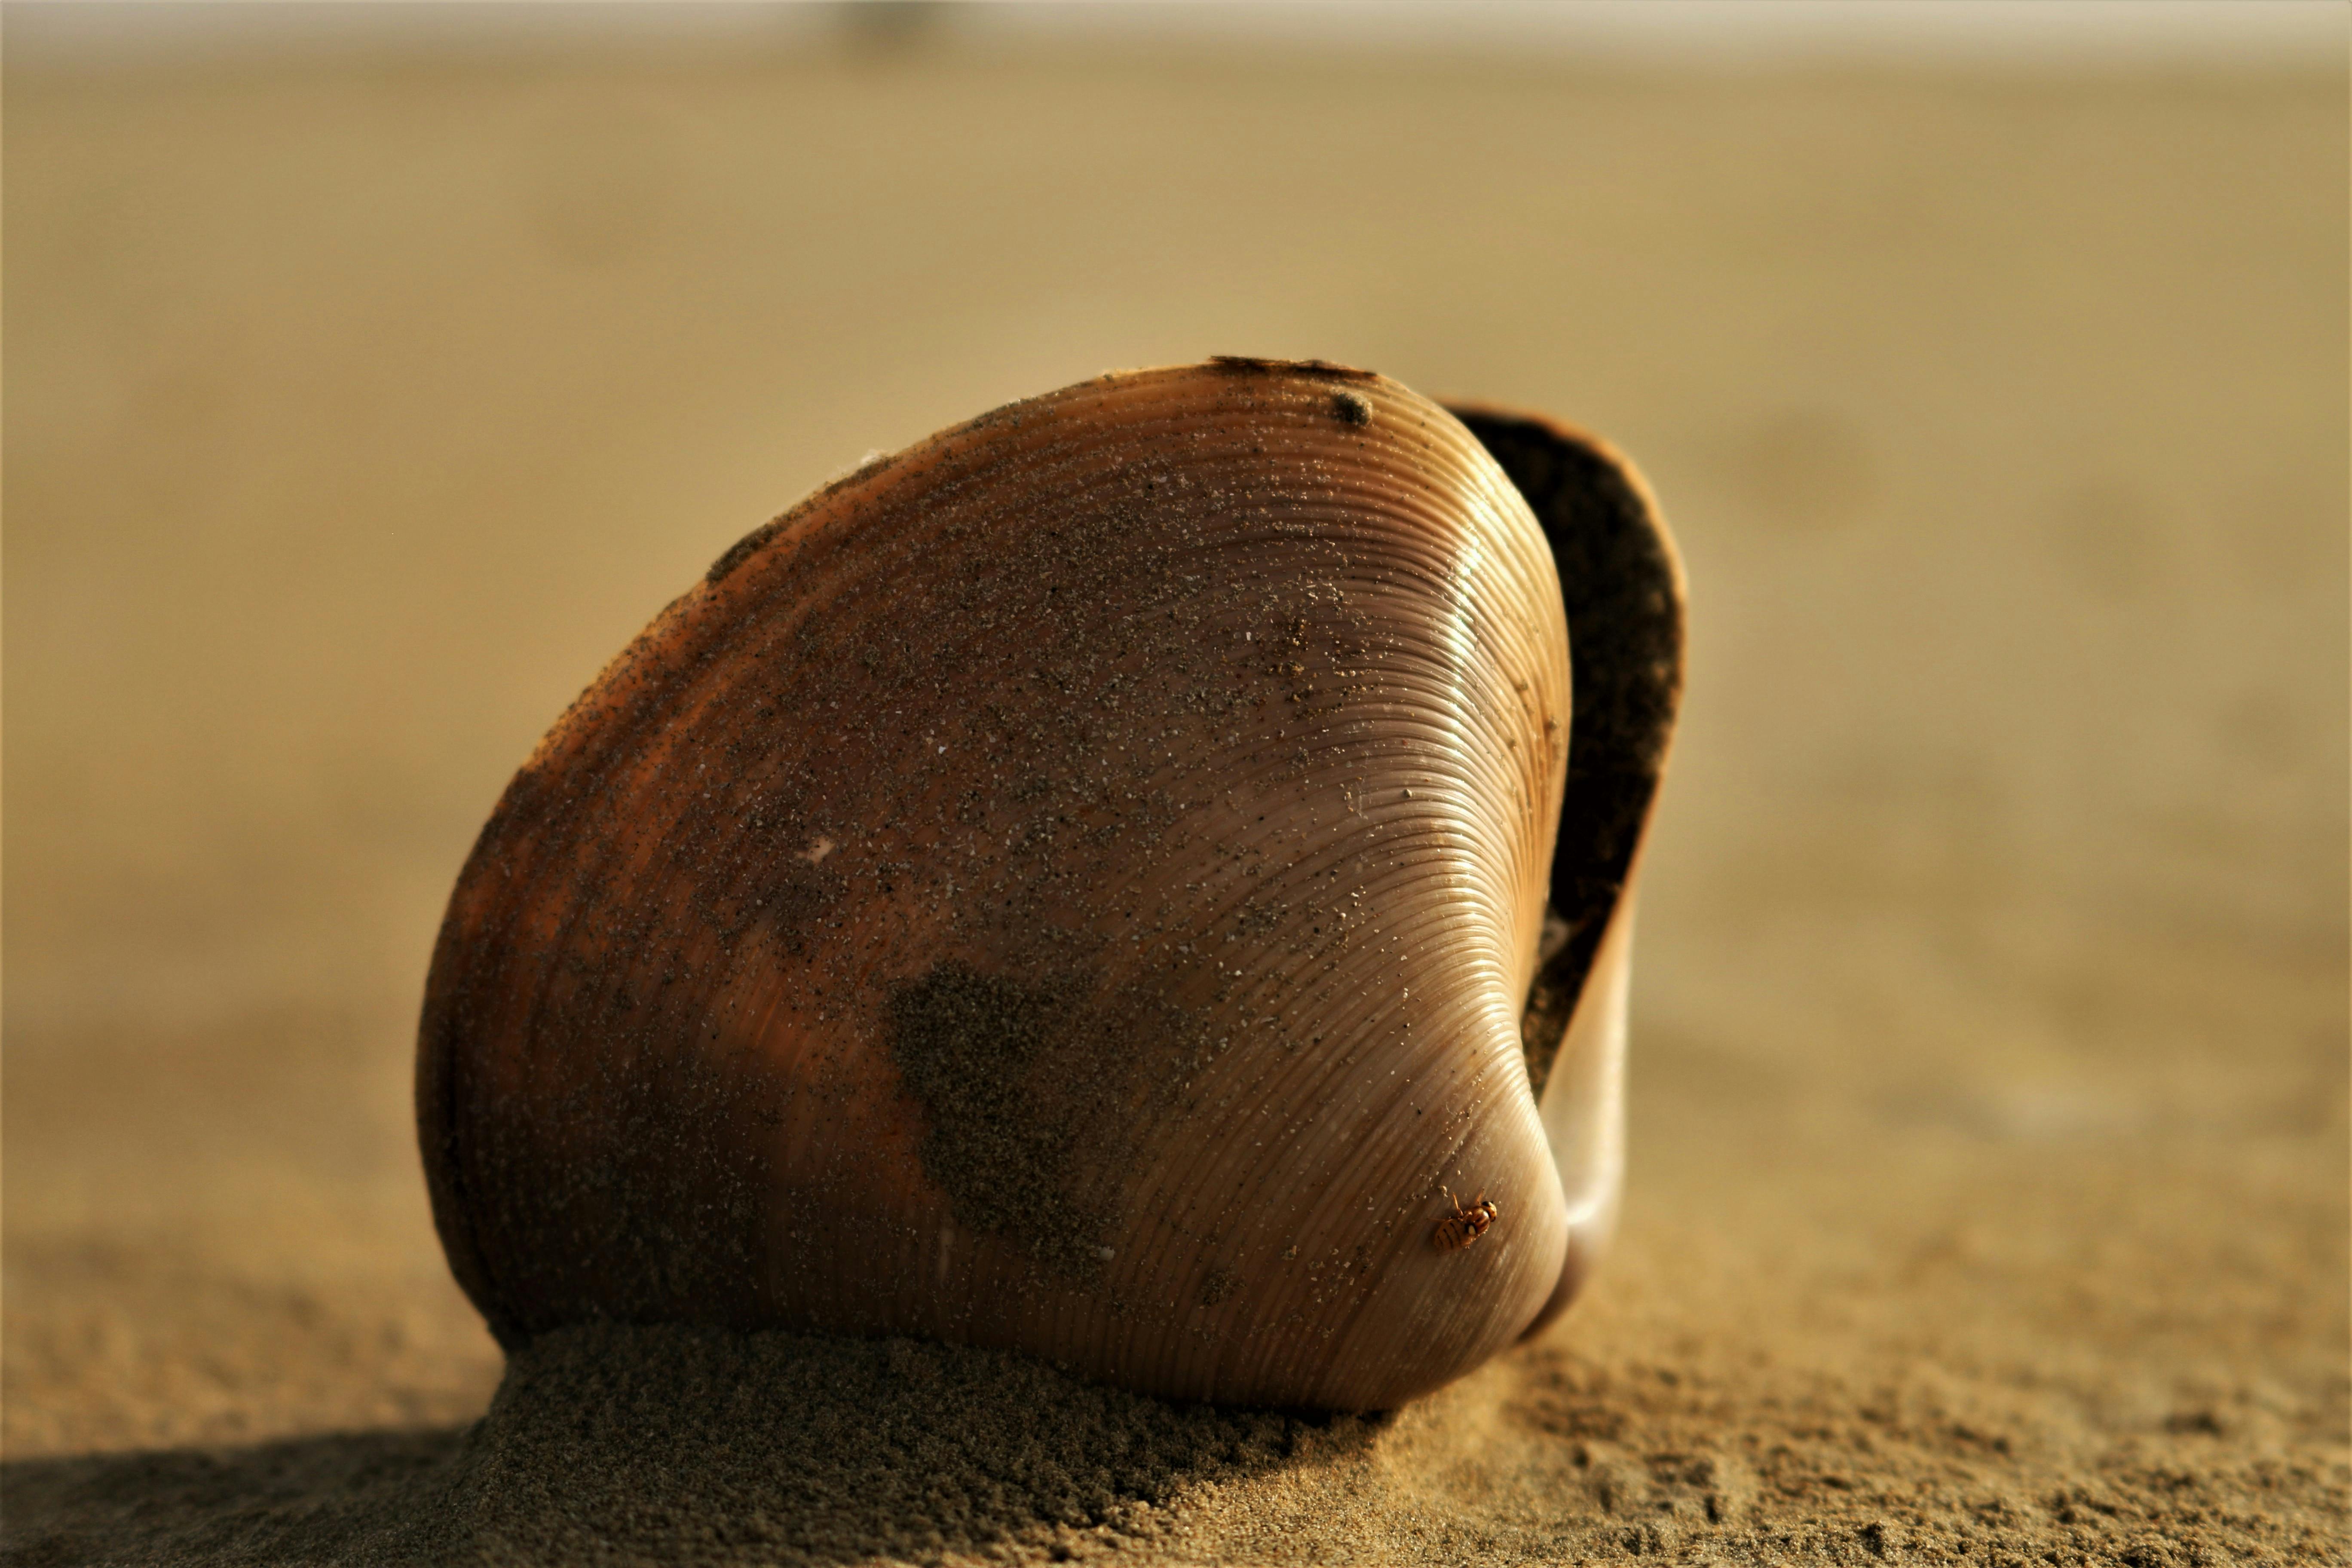 Free stock photo of Golden Shell, sea shells, sea side